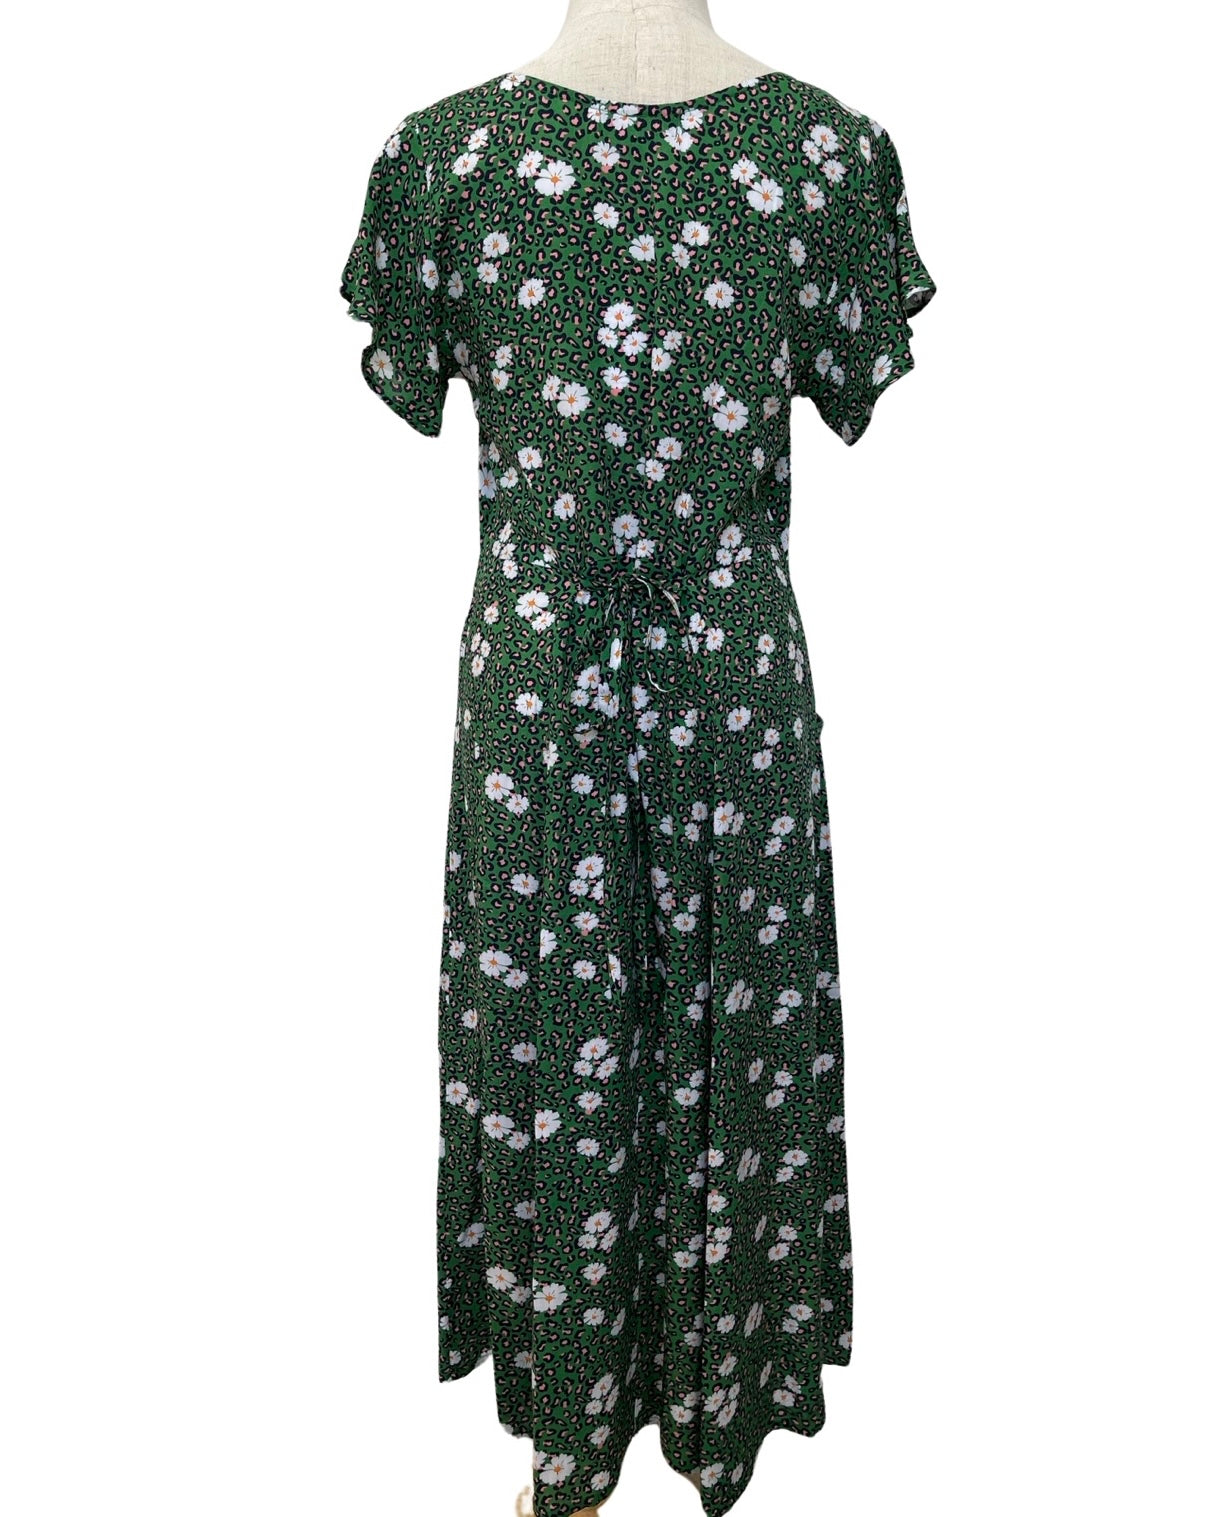 "Lucia" Dress - Emerald Floral